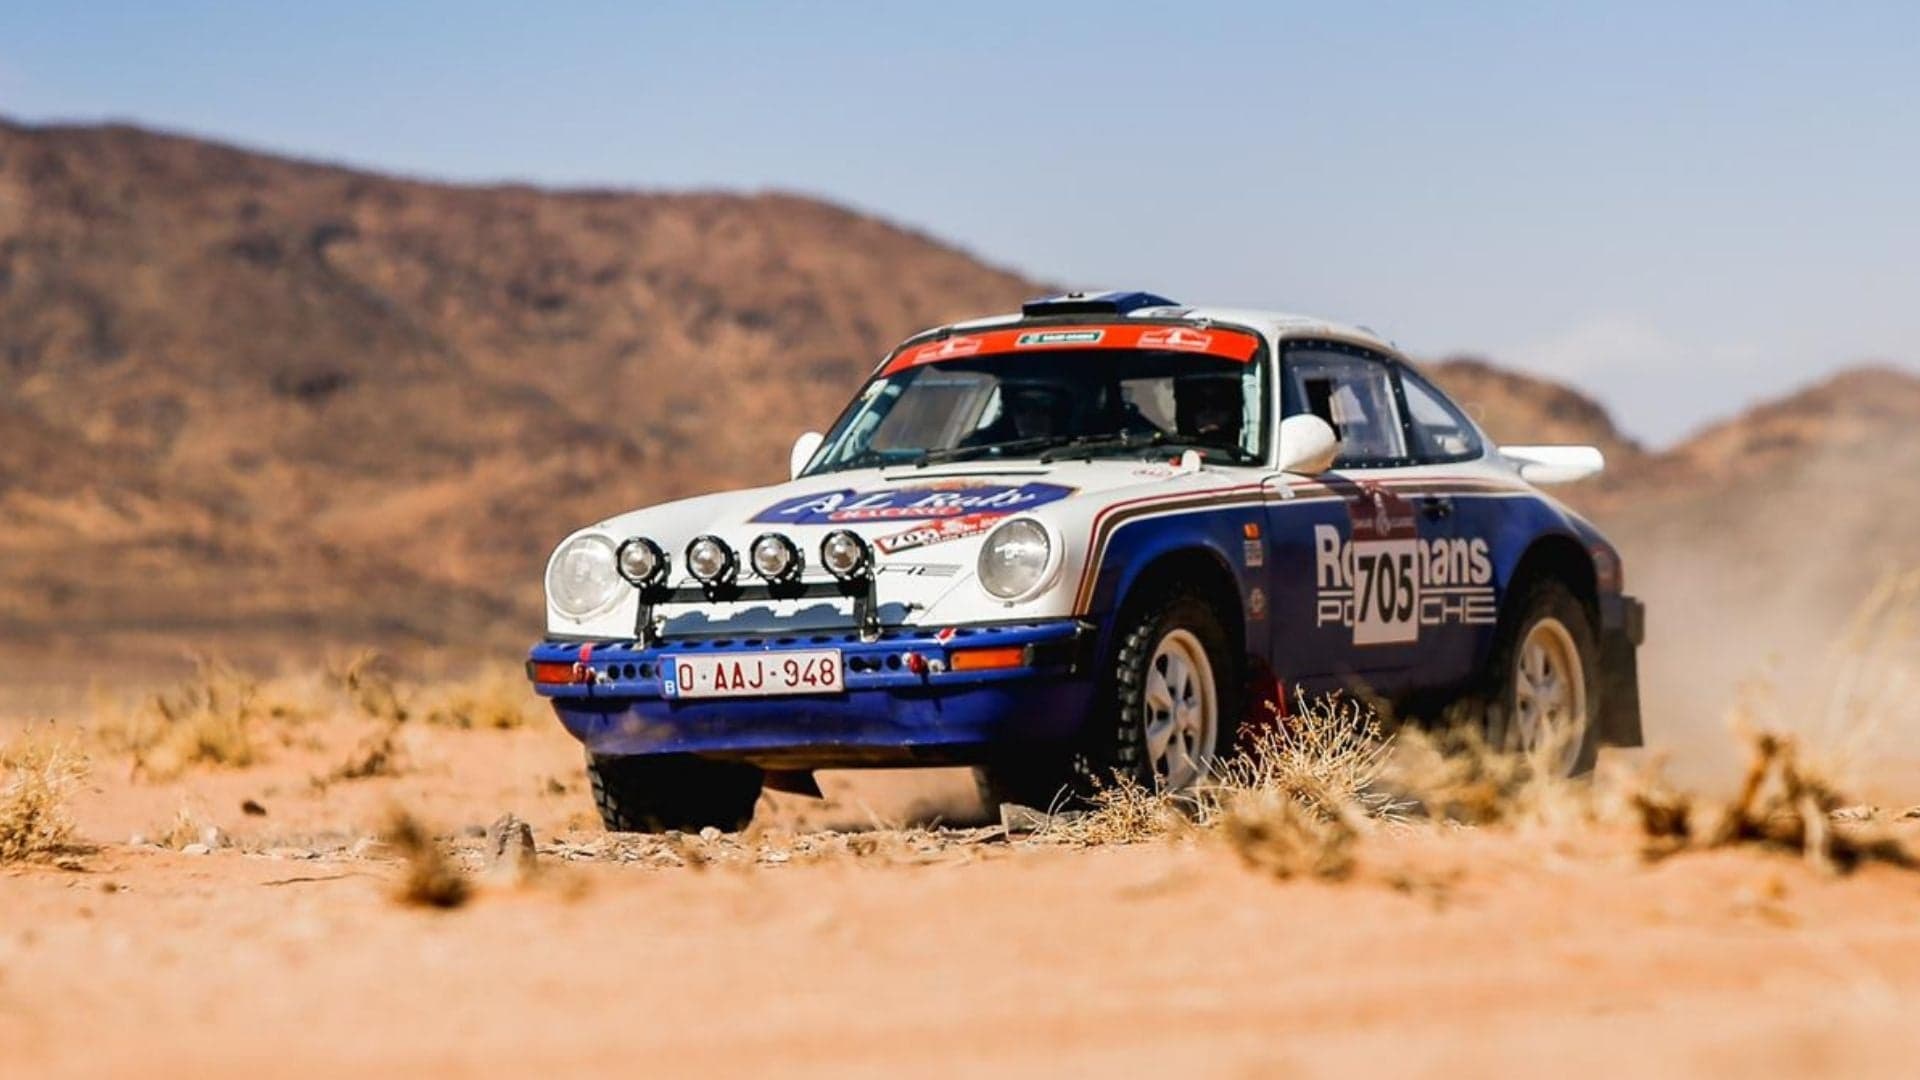 Meet the American Team Who Piloted a 1982 Porsche 911 SC in the Dakar